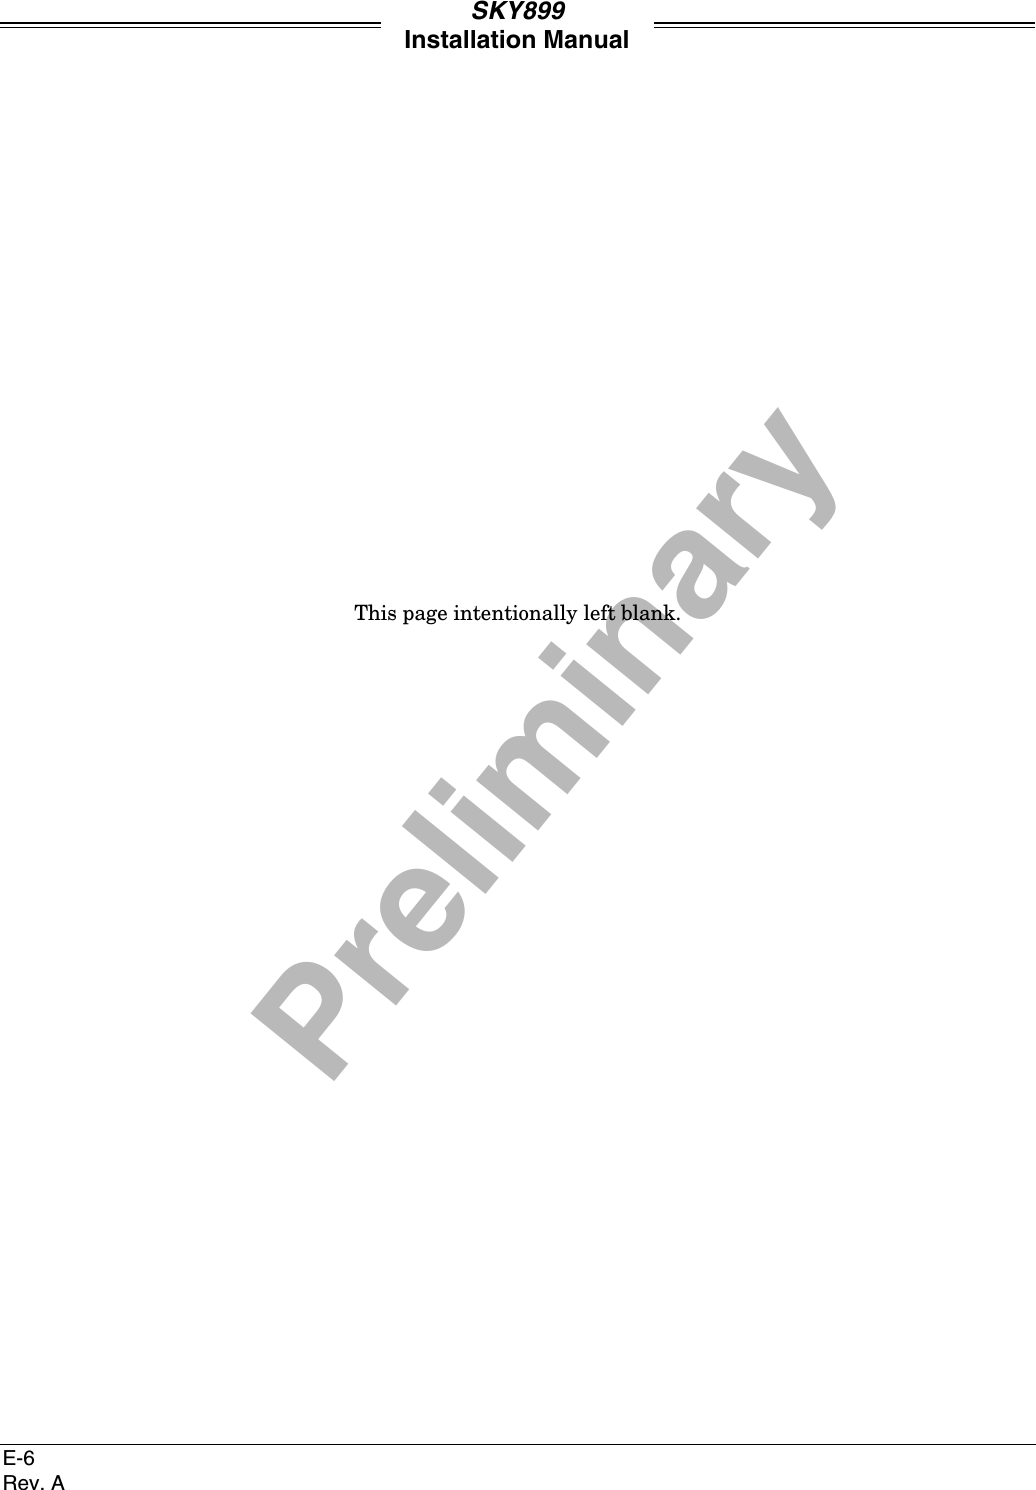 PreliminarySKY899Installation ManualE-6Rev. AThis page intentionally left blank.